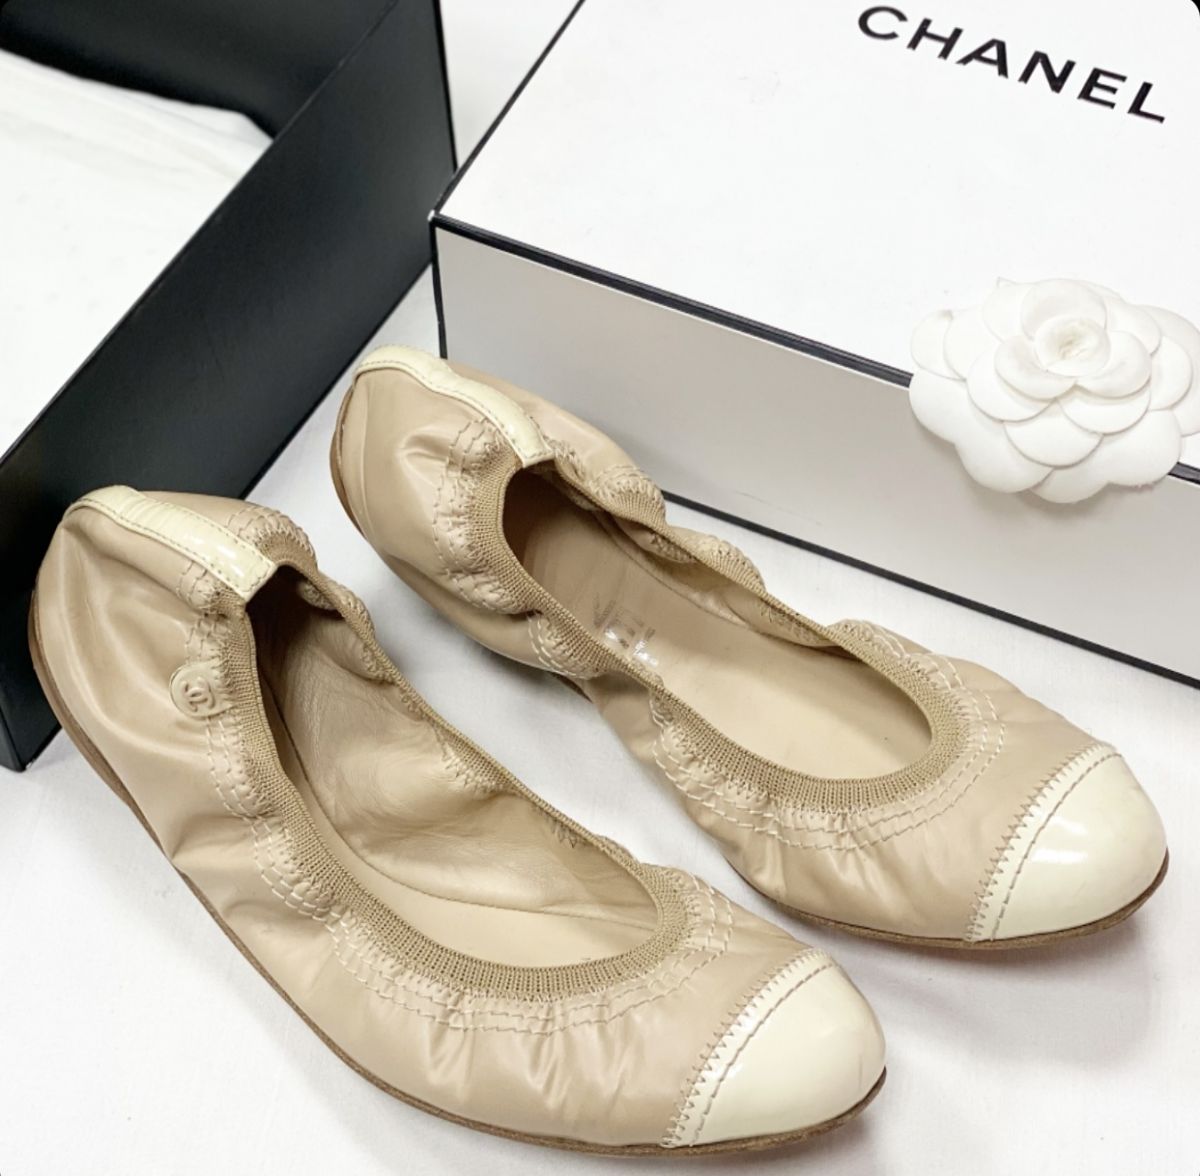 Балетки Chanel размер 38 цена 10 770 руб 